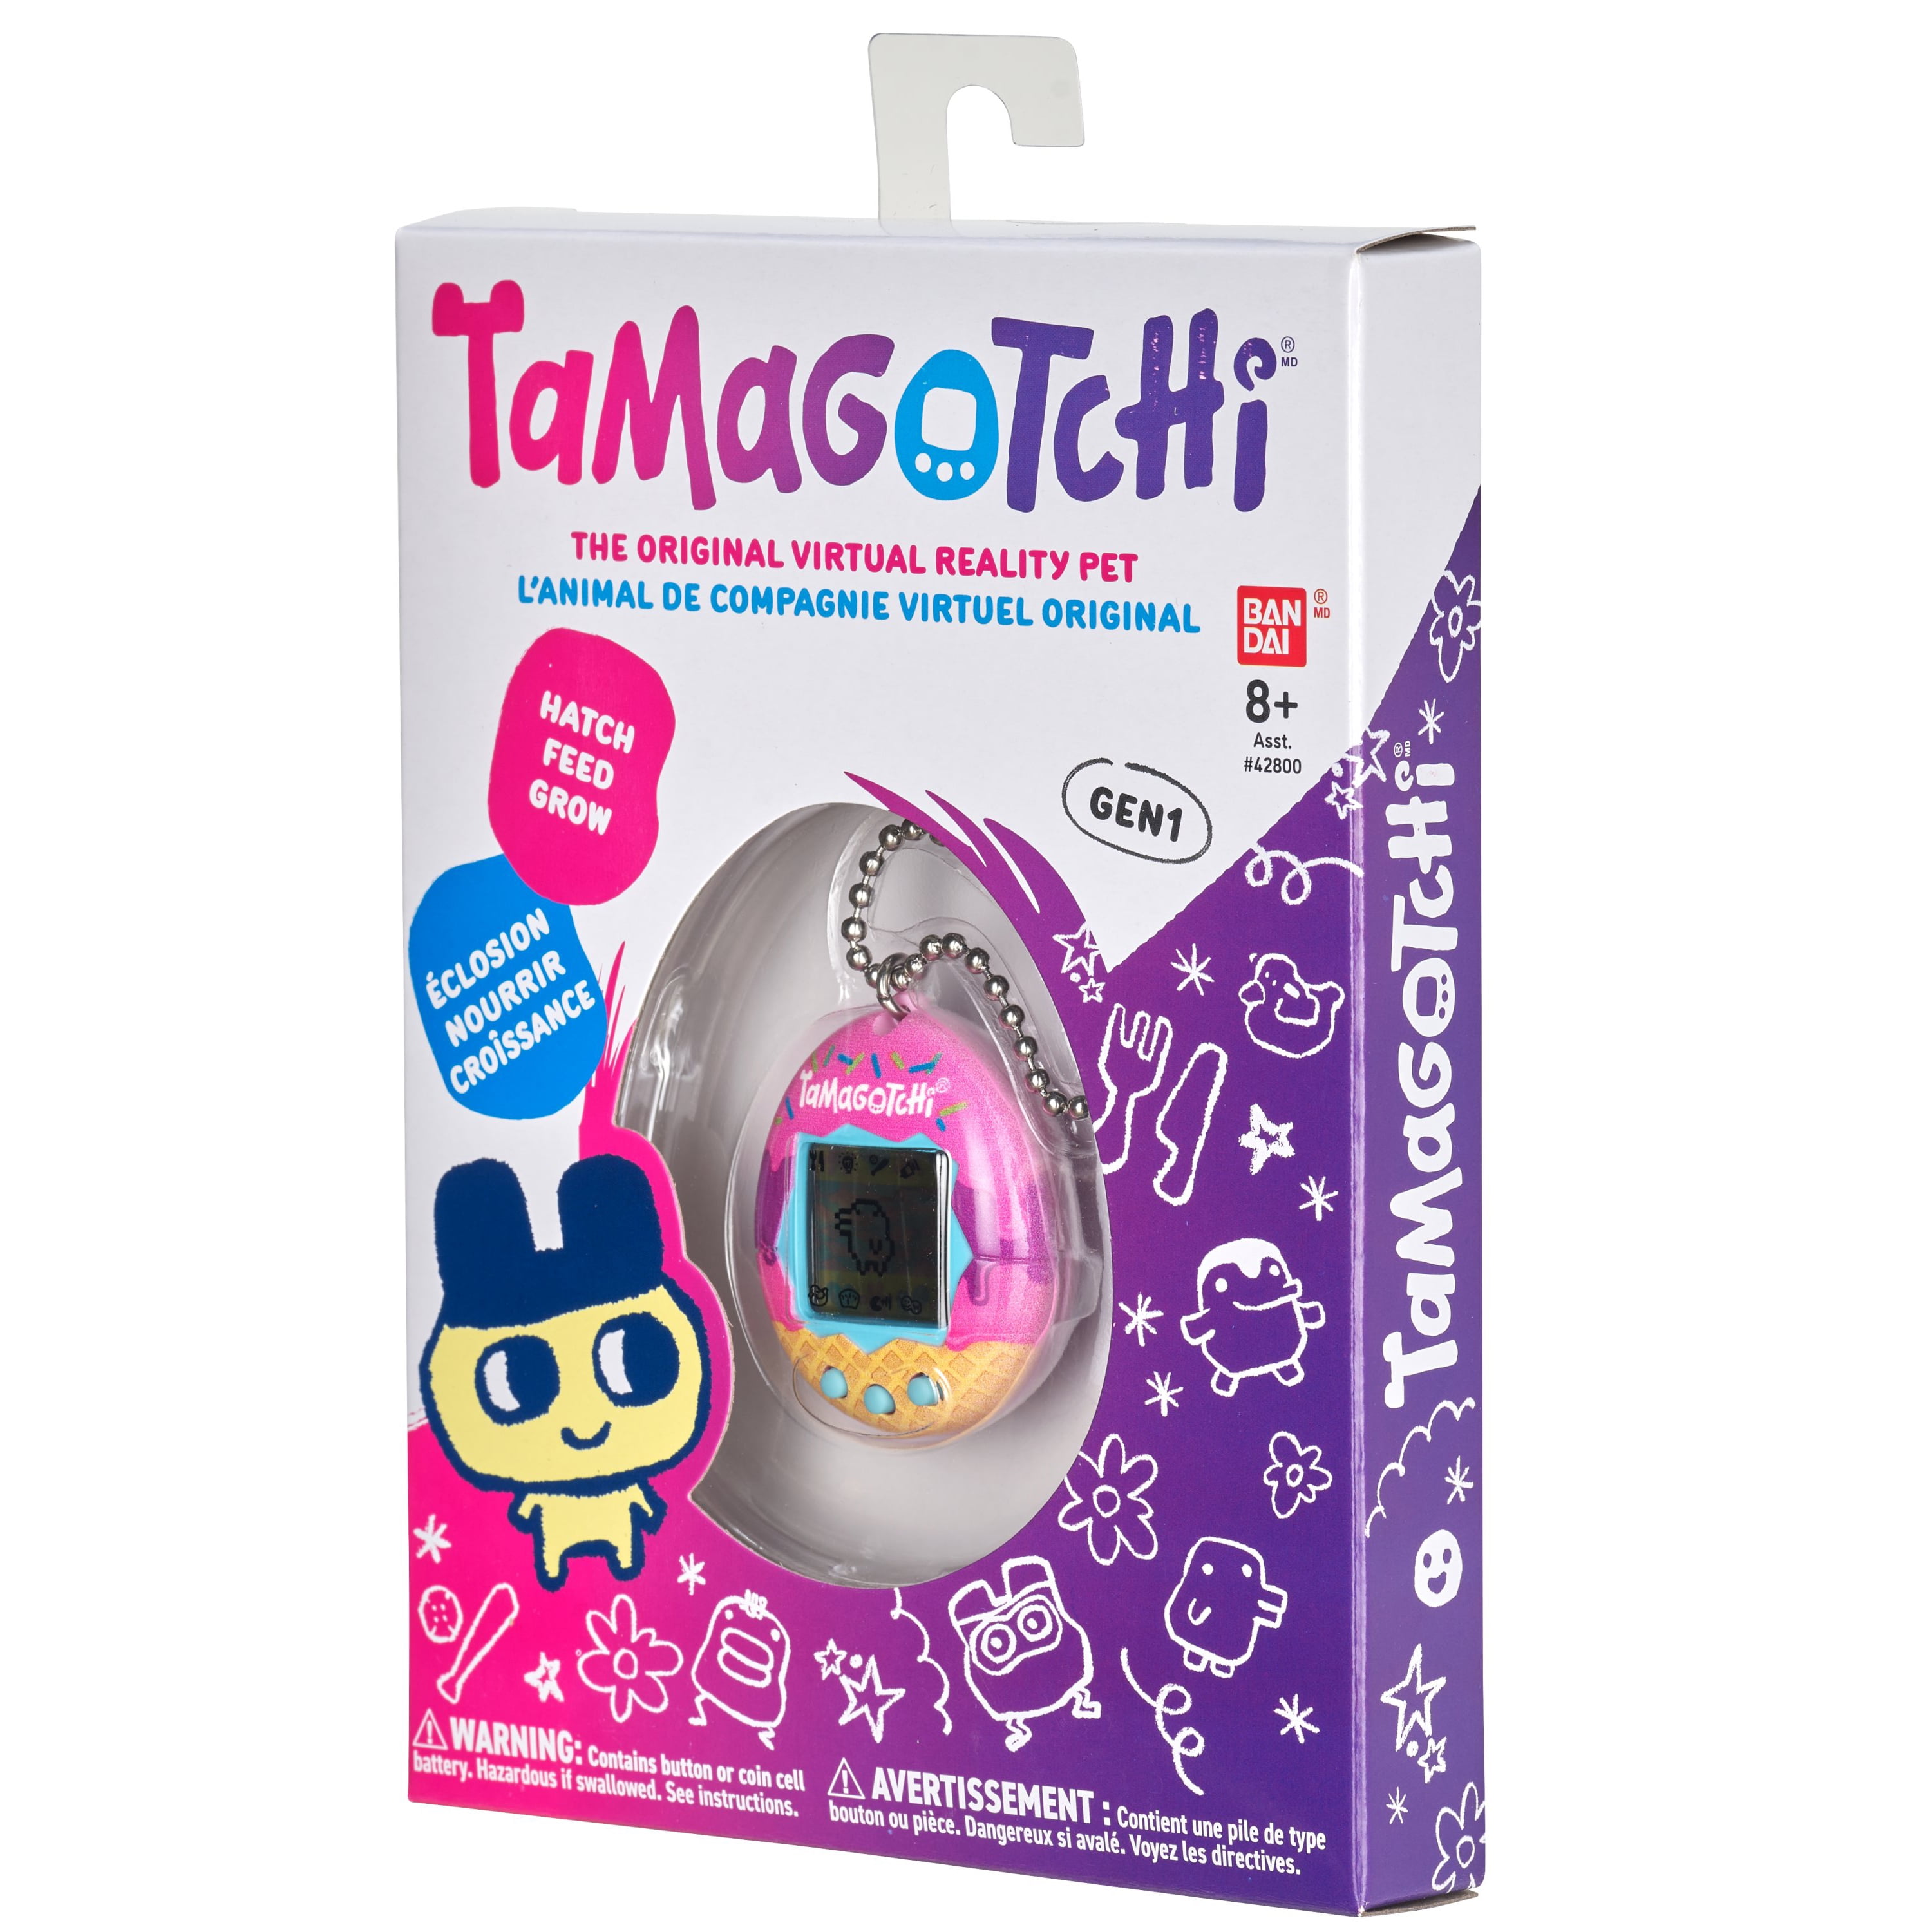 BANDAI Tamagotchi Original Tamagotchi Ice Cream